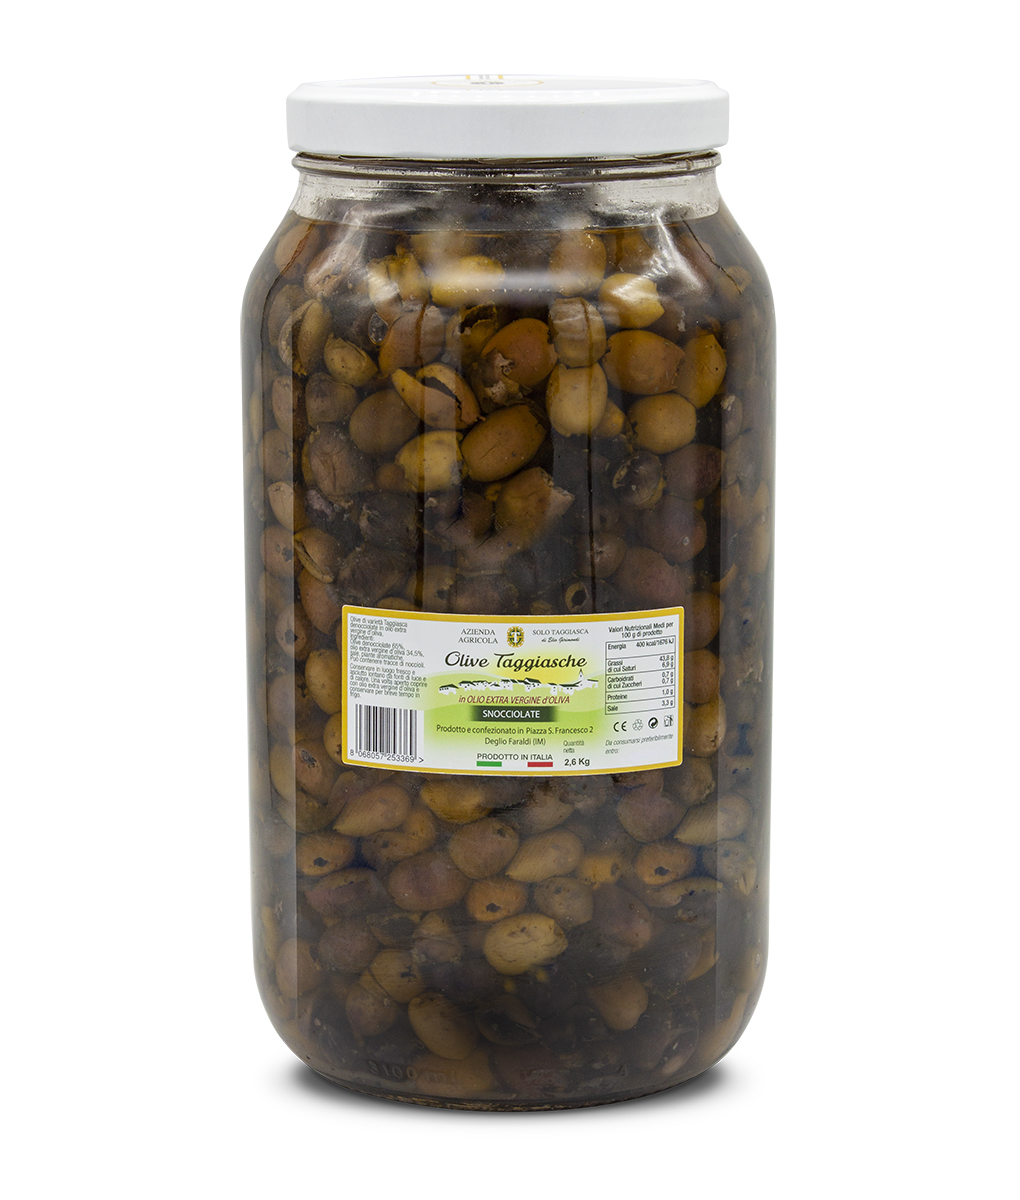 Pitted Taggiasche olives in Evo Jar 3100 ml